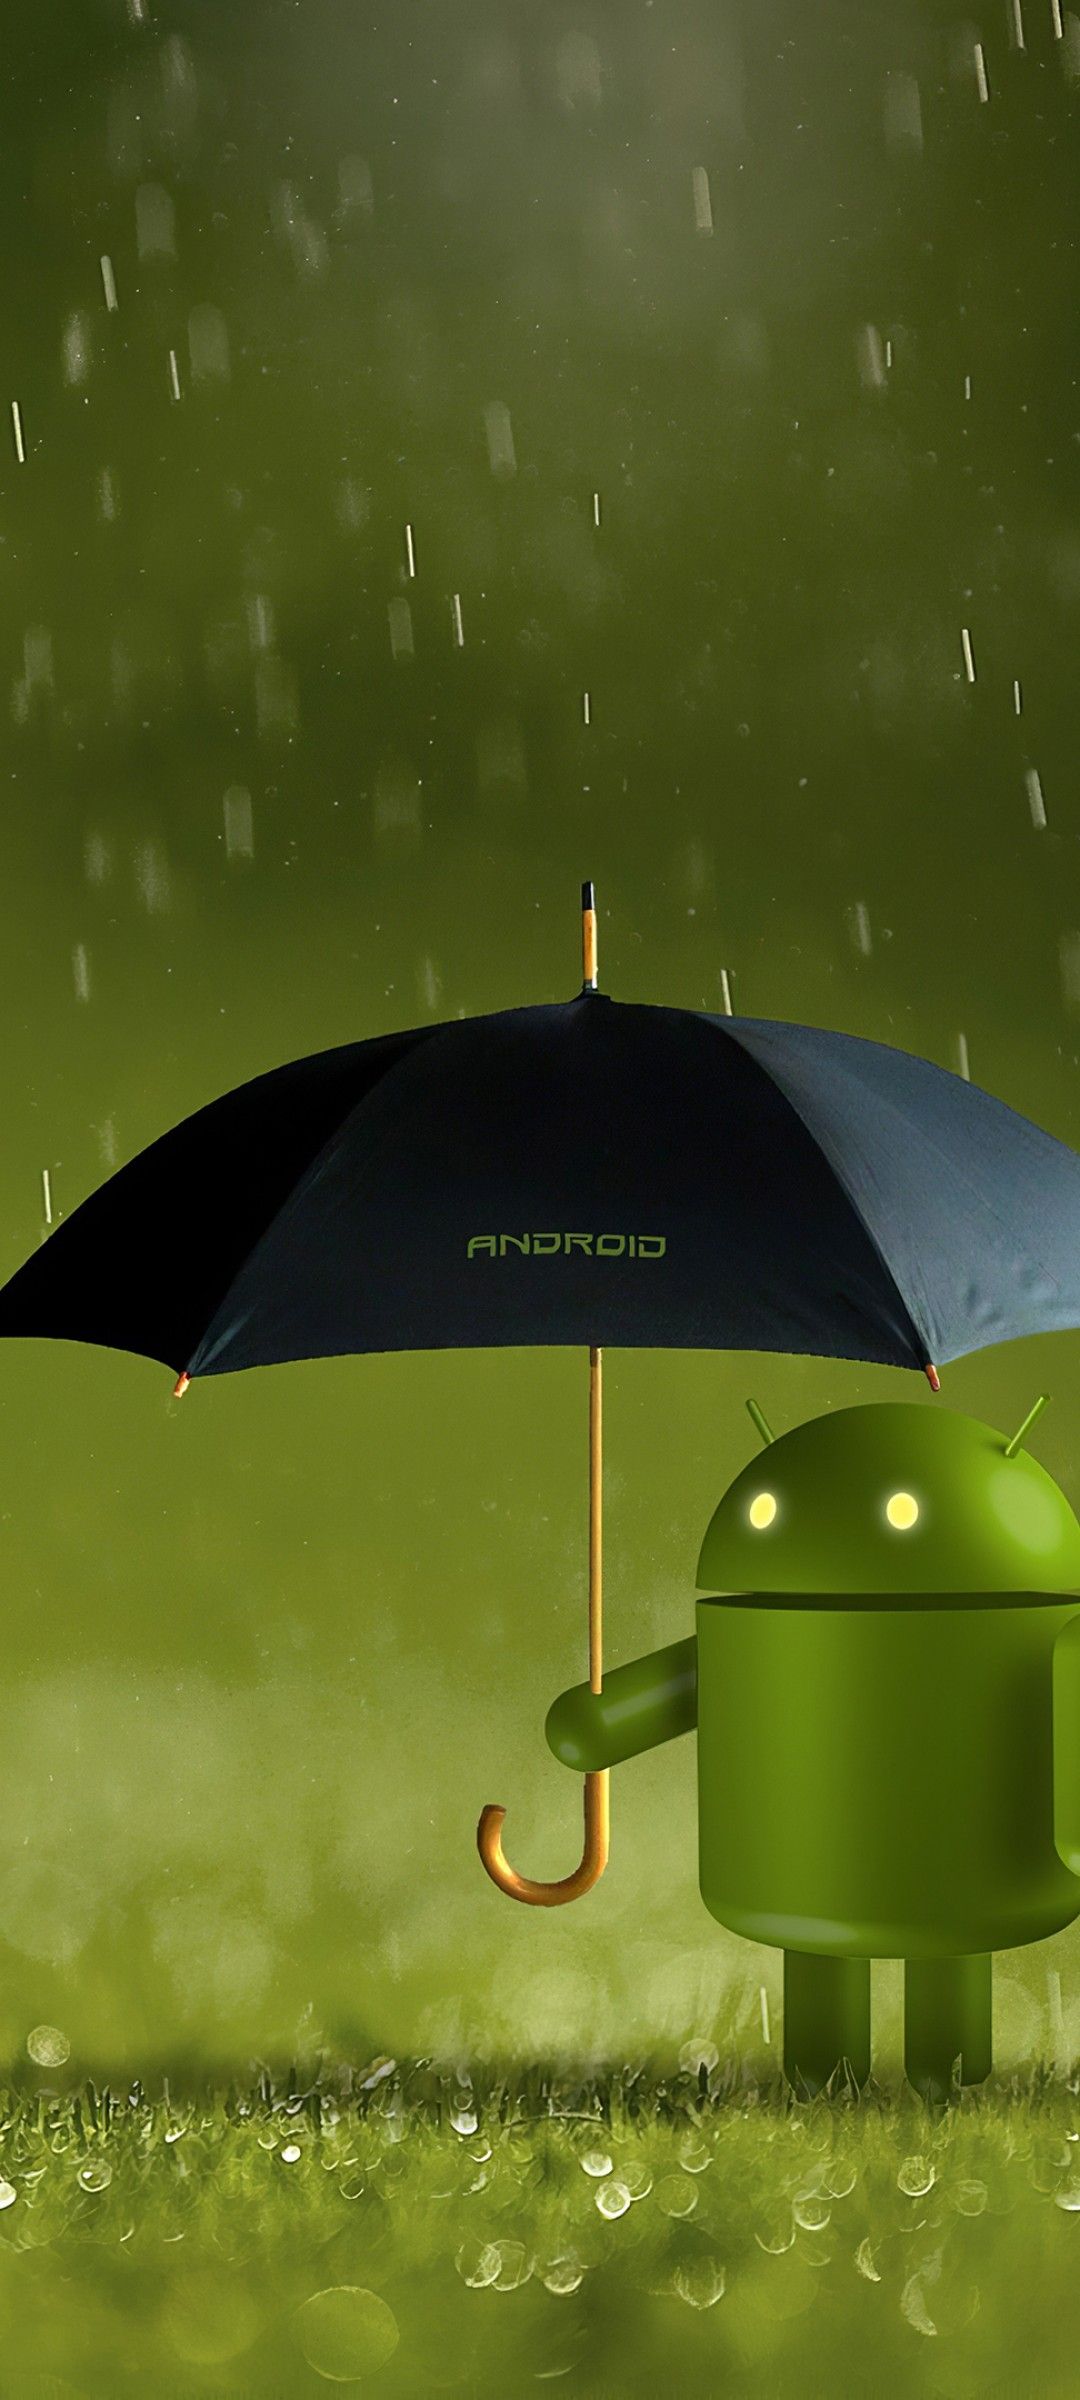 Android logo 4K Wallpaper, Android robot, Umbrella, Rain, Green, Technology